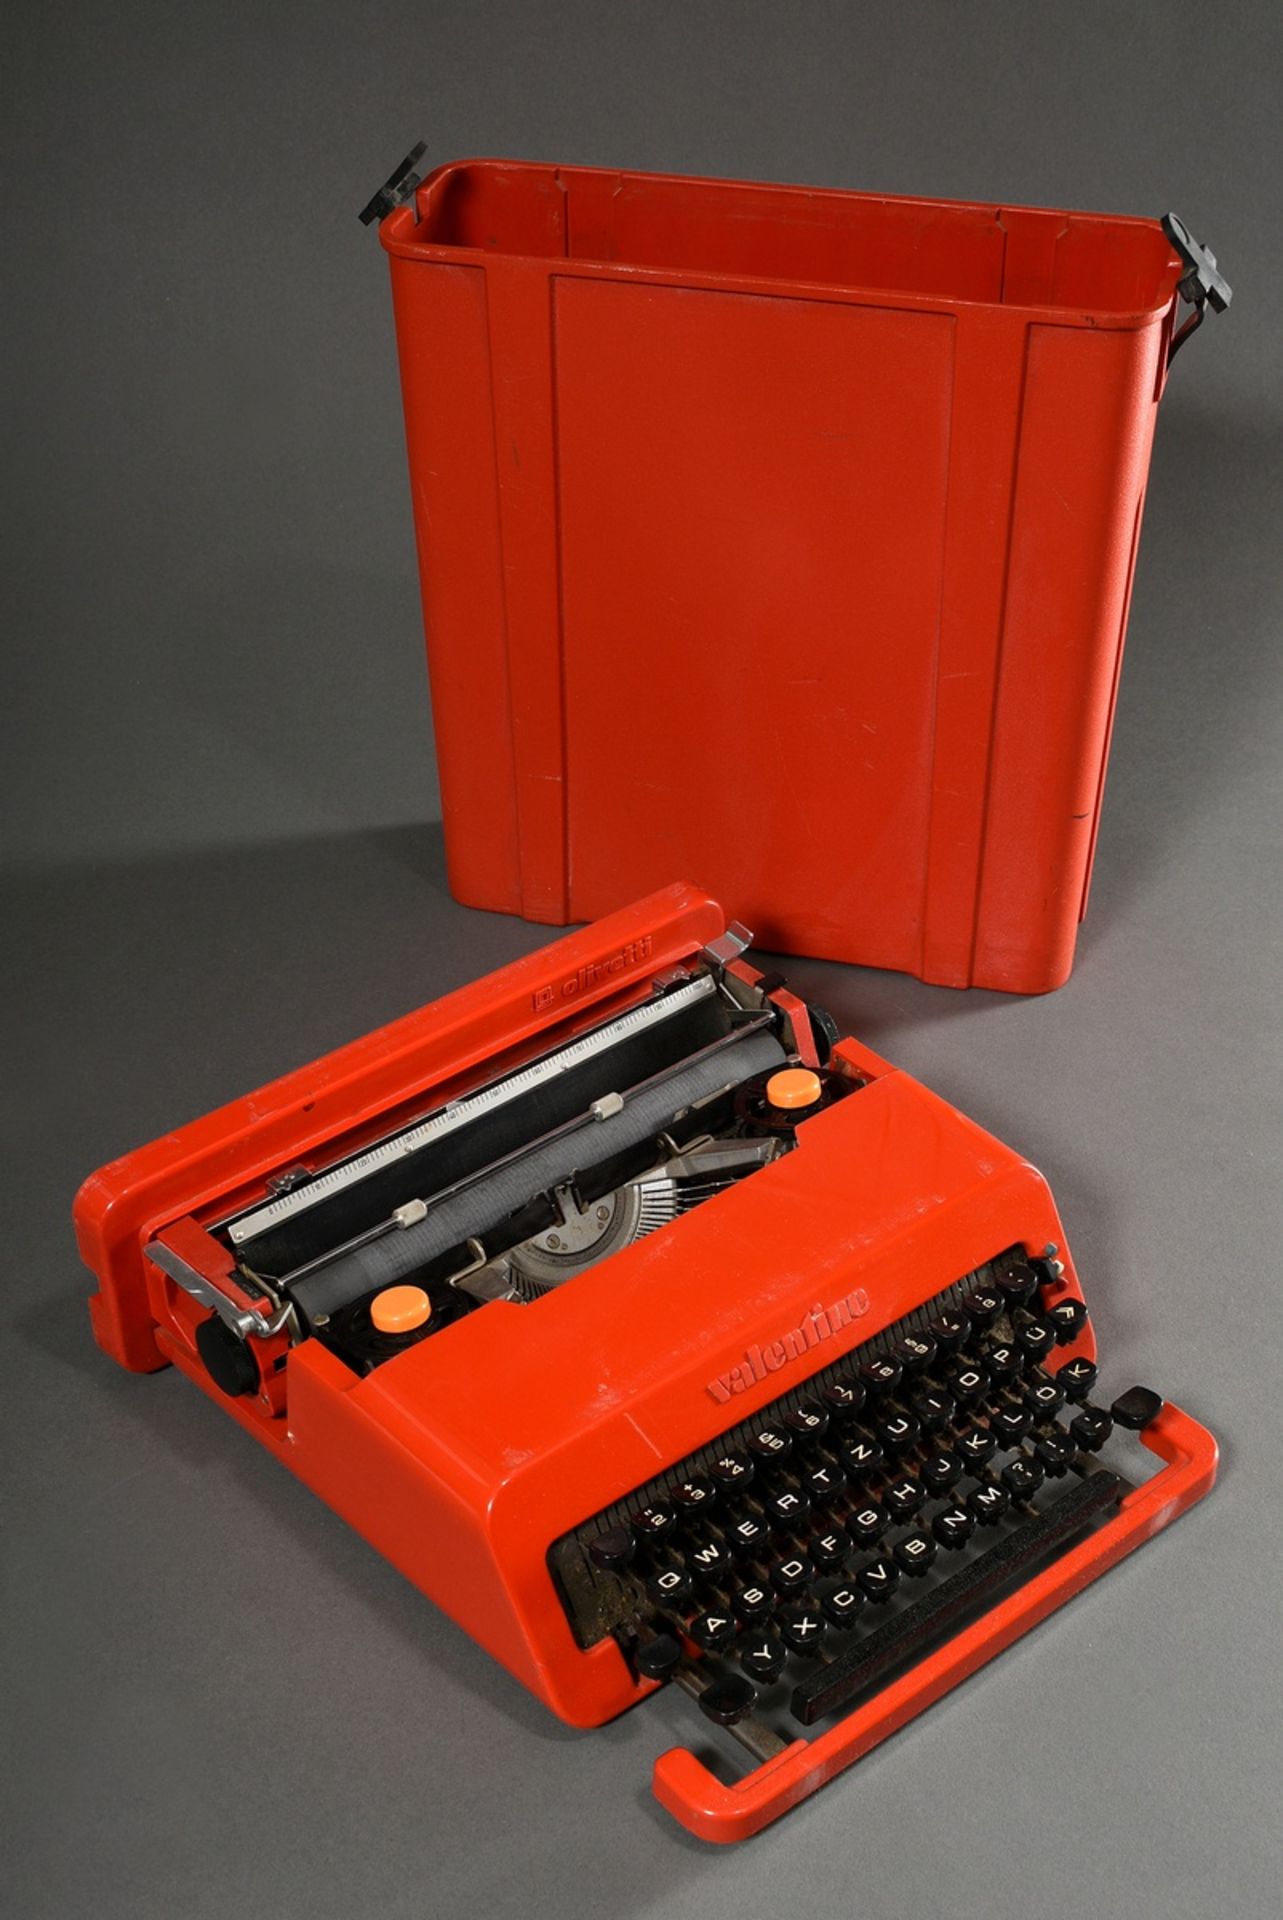 Sottsas, Ettore (1917-2007) typewriter "Valentine", design: 1968, manufactured by Olivetti/Barcelon